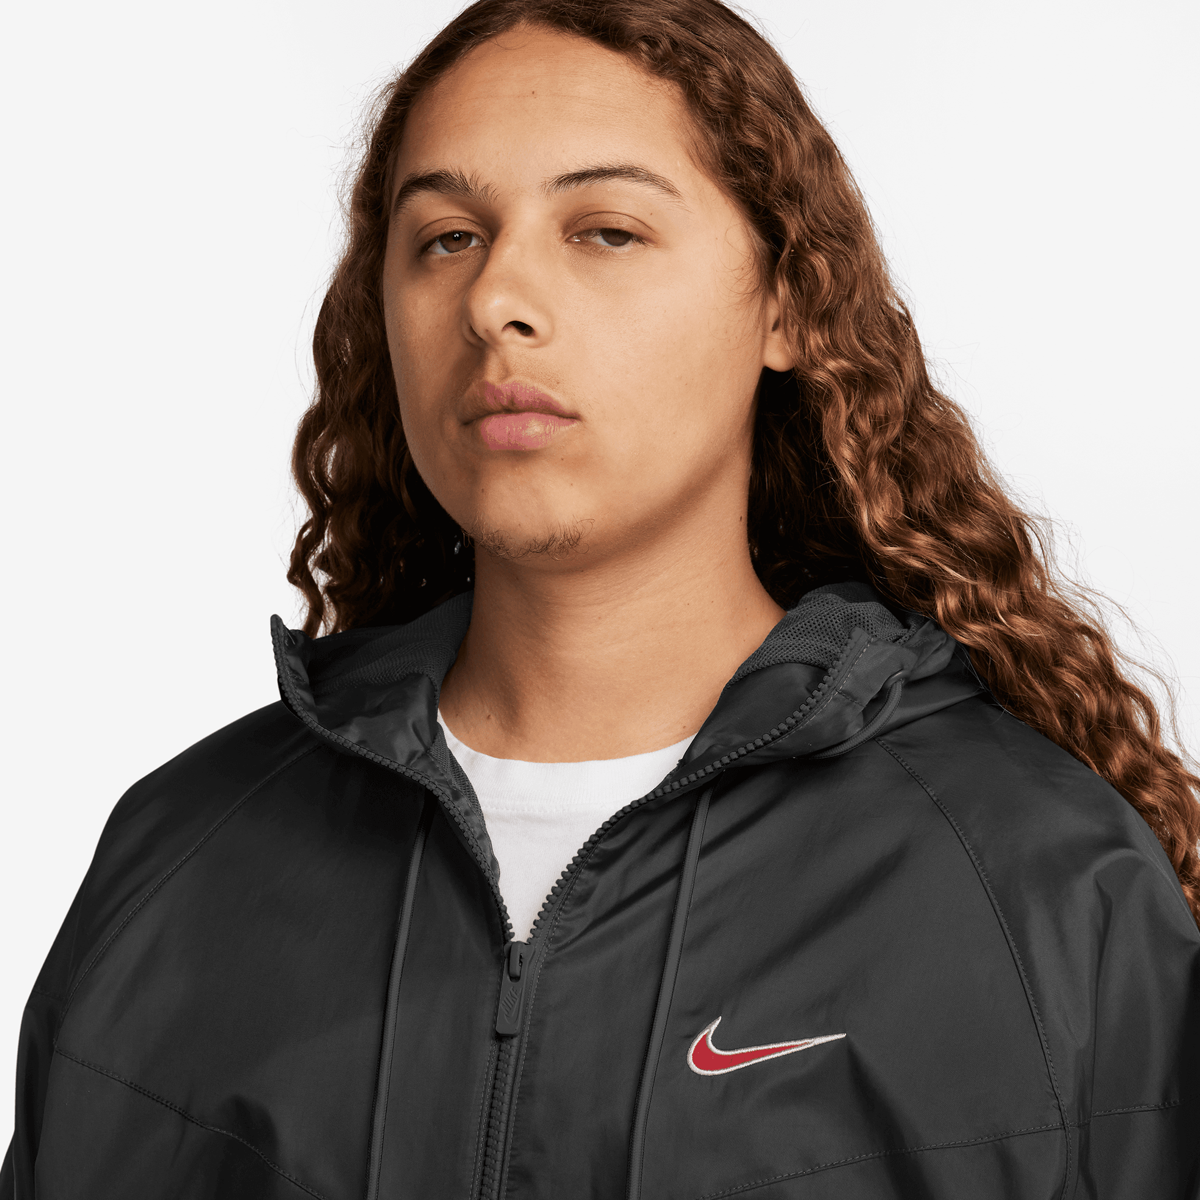 Nike Windrunner Woven Lined Graphics Jacket Trainingsjassen Heren black university red maat: M beschikbare maaten:S M L XL